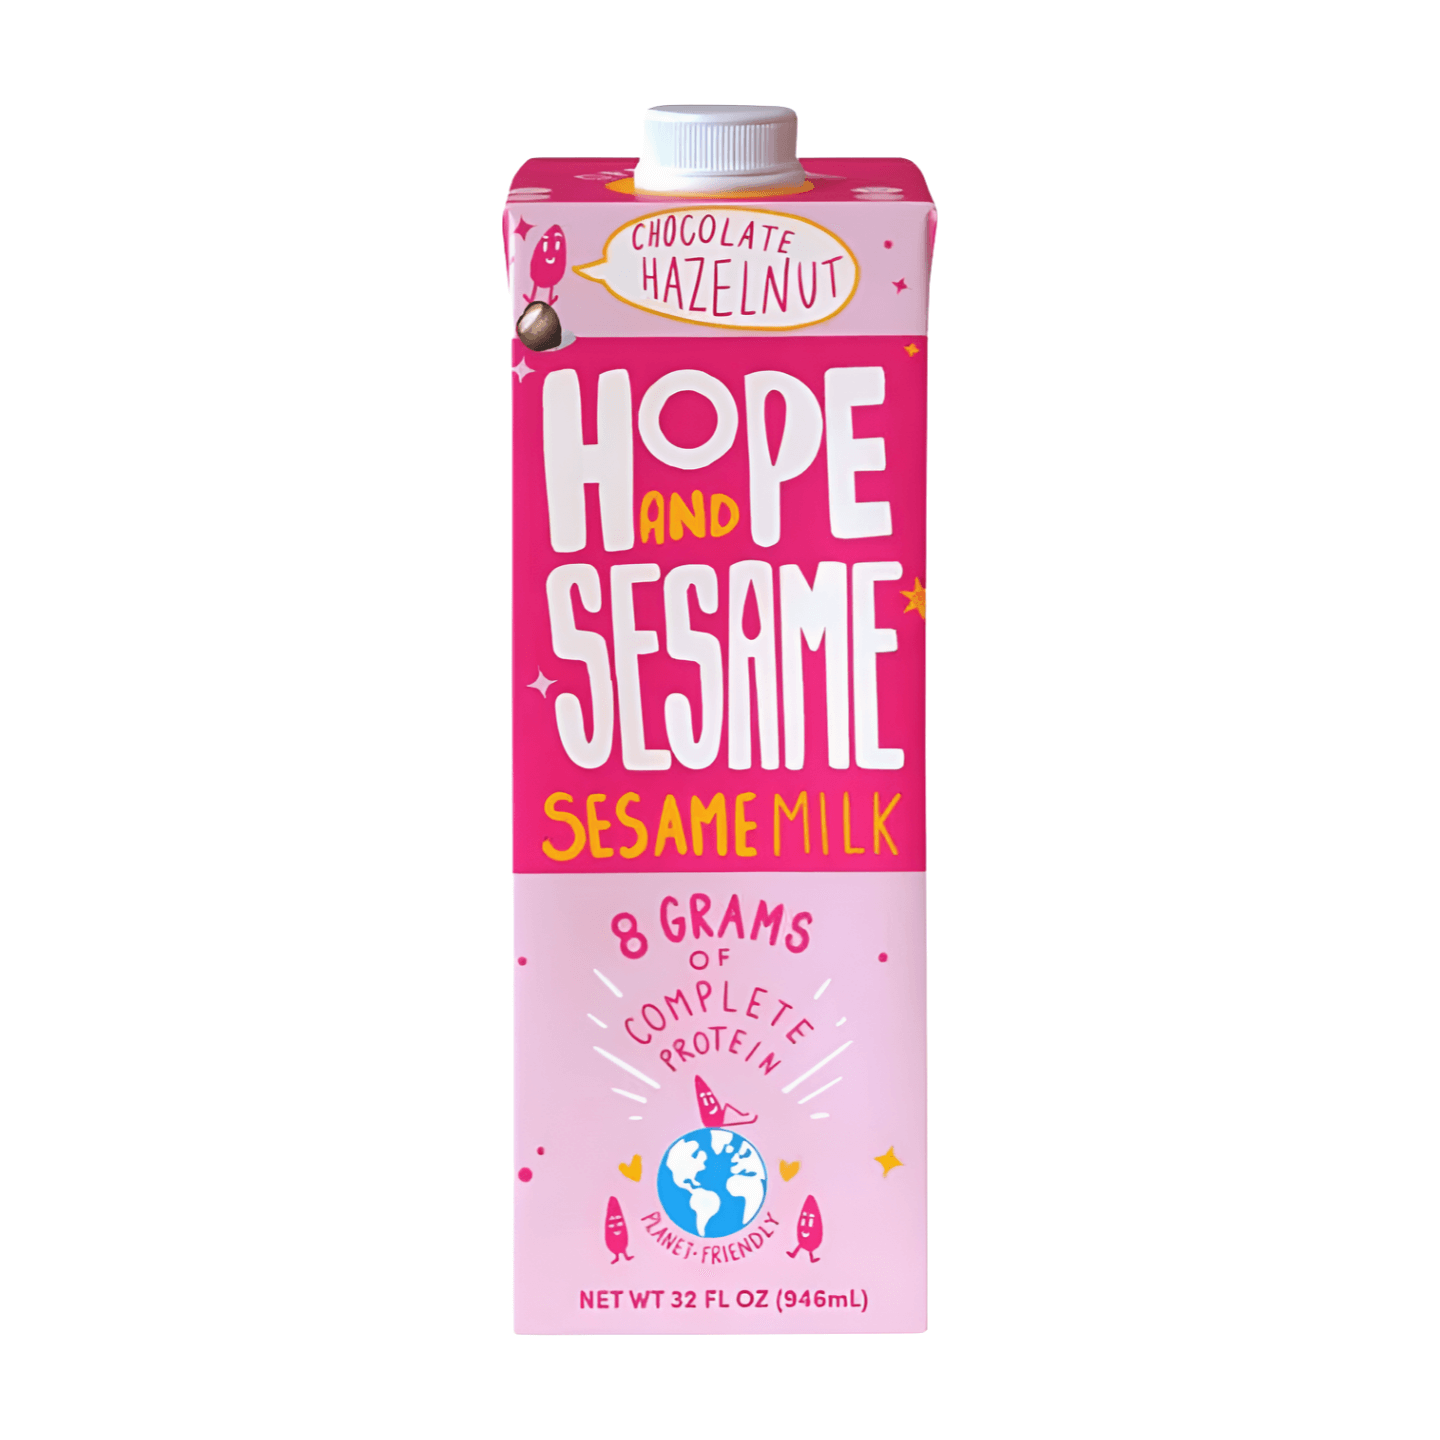 Hope And Sesame Chocolate Hazelnut Sesamemilk Shelf Stable